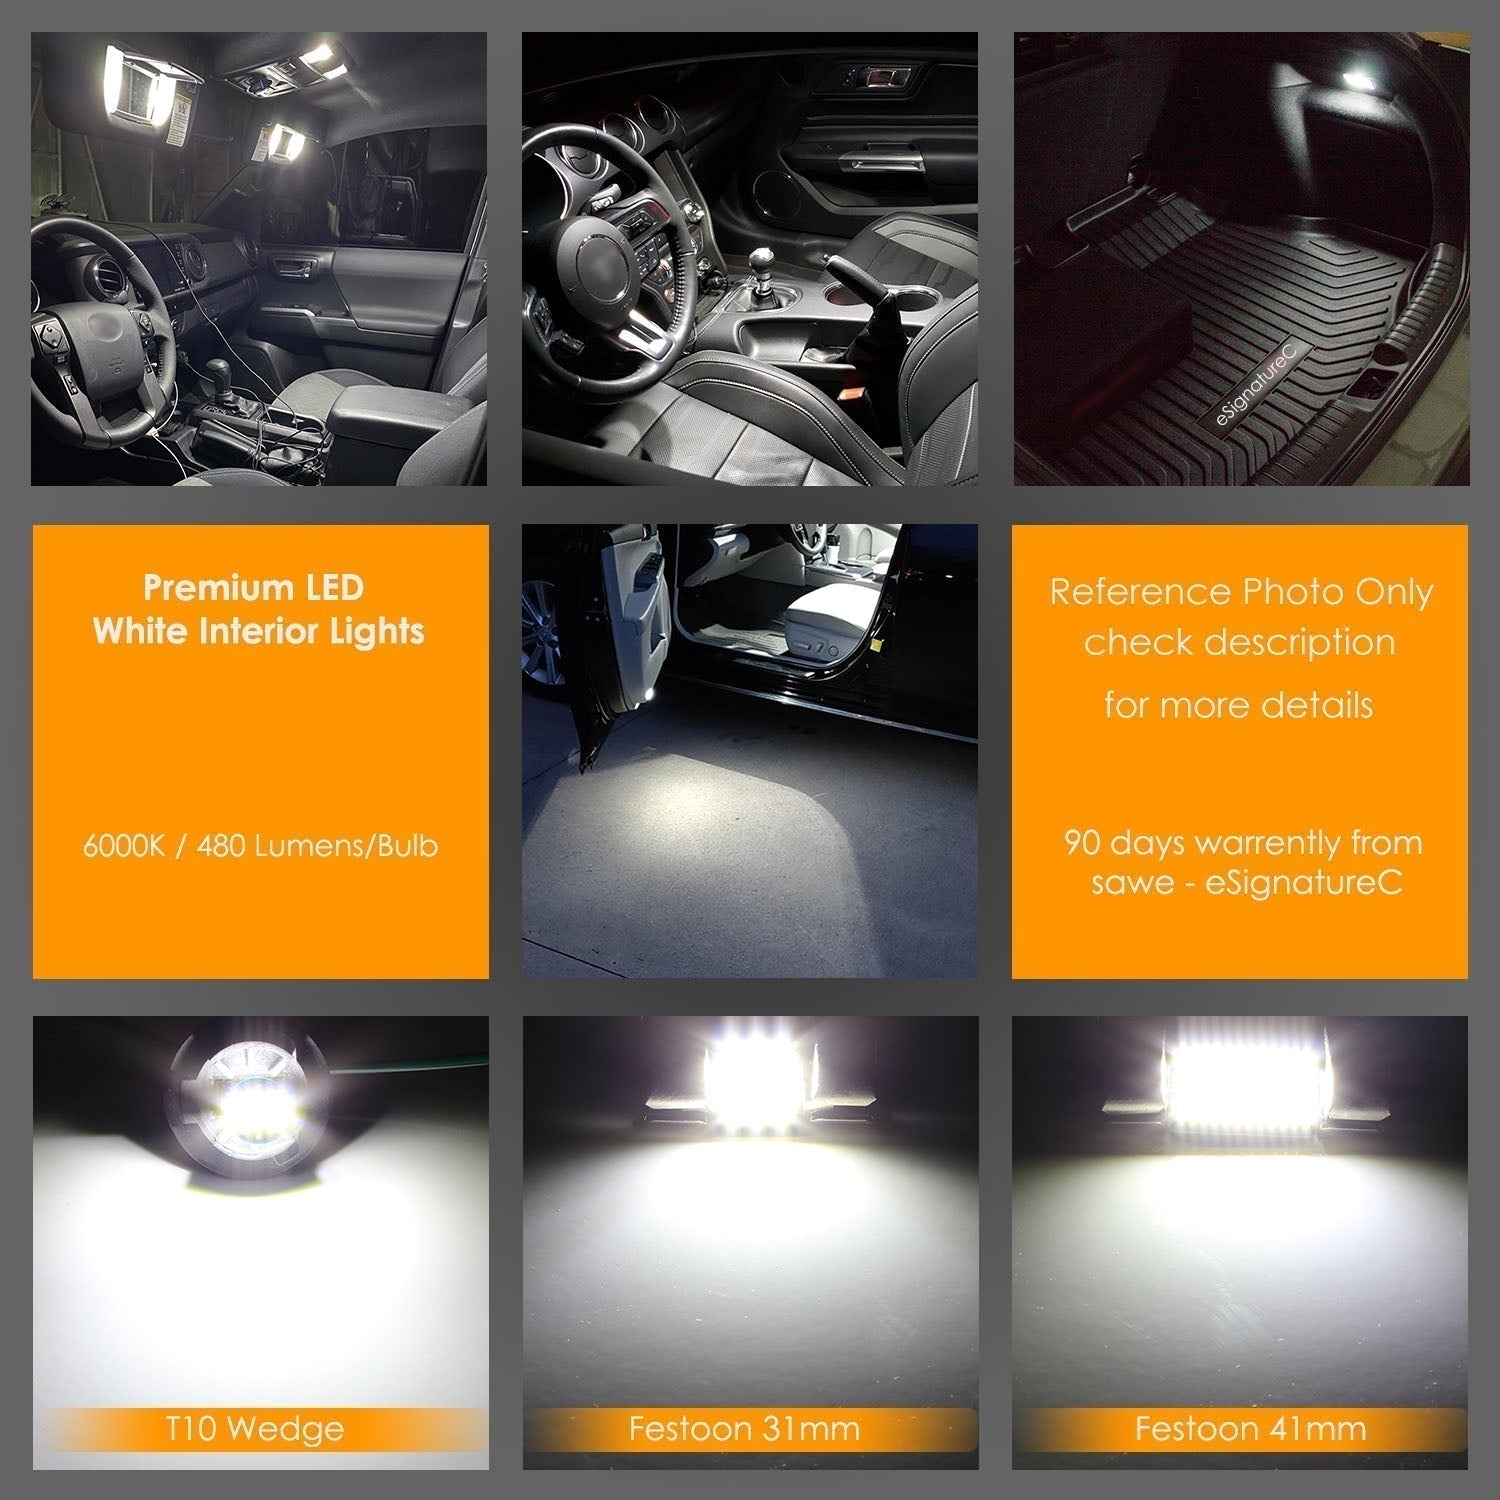 For Mercedes Benz ML320 ML350 Interior LED Lights - Dome & Map Light Bulb Package Kit for 1998 - 2005 - White